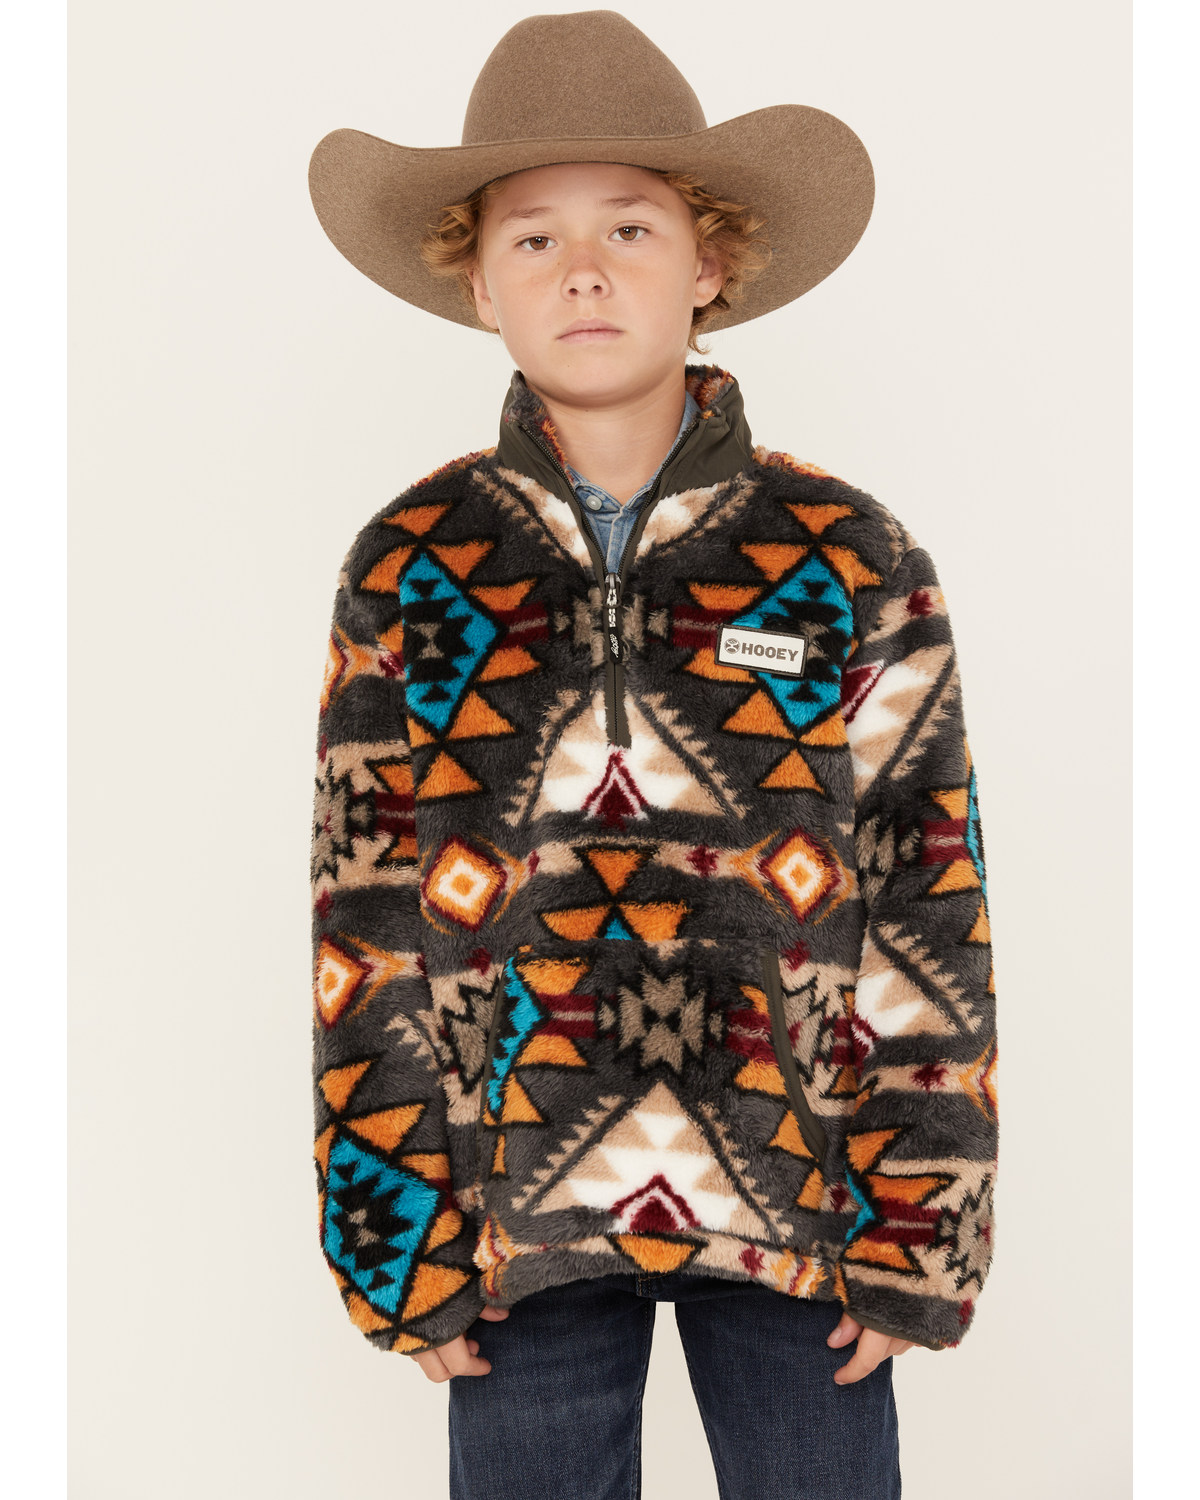 Hooey Boys' Southwestern Print Quarter-Zip Fleece Pullover